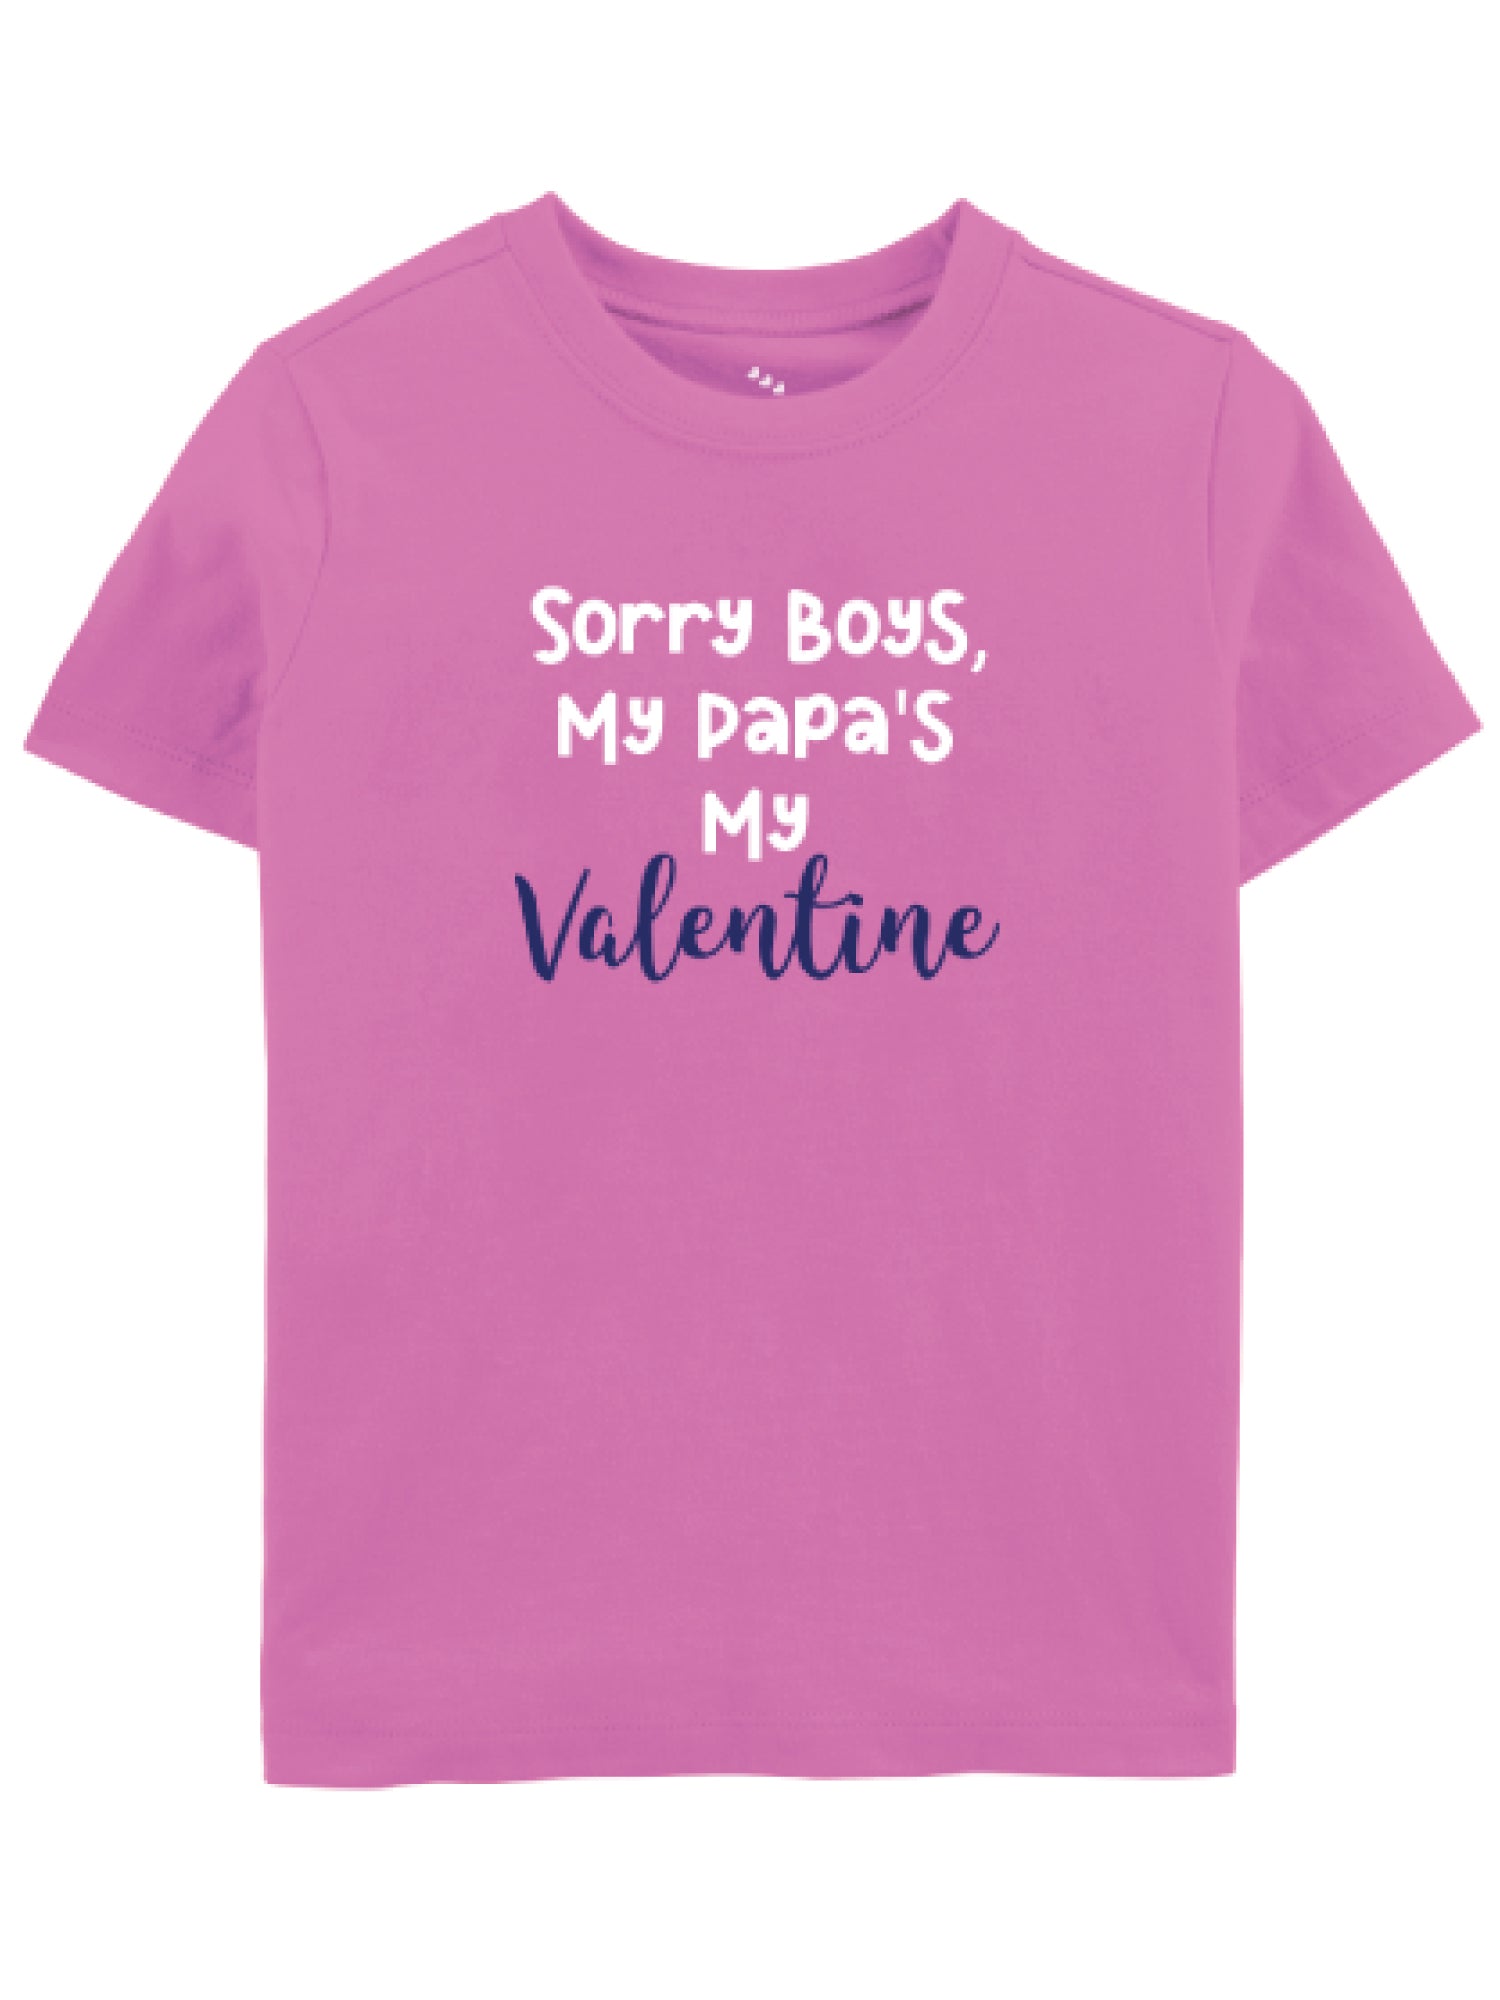 Sorry boys my Papa's my Valentine - Tee